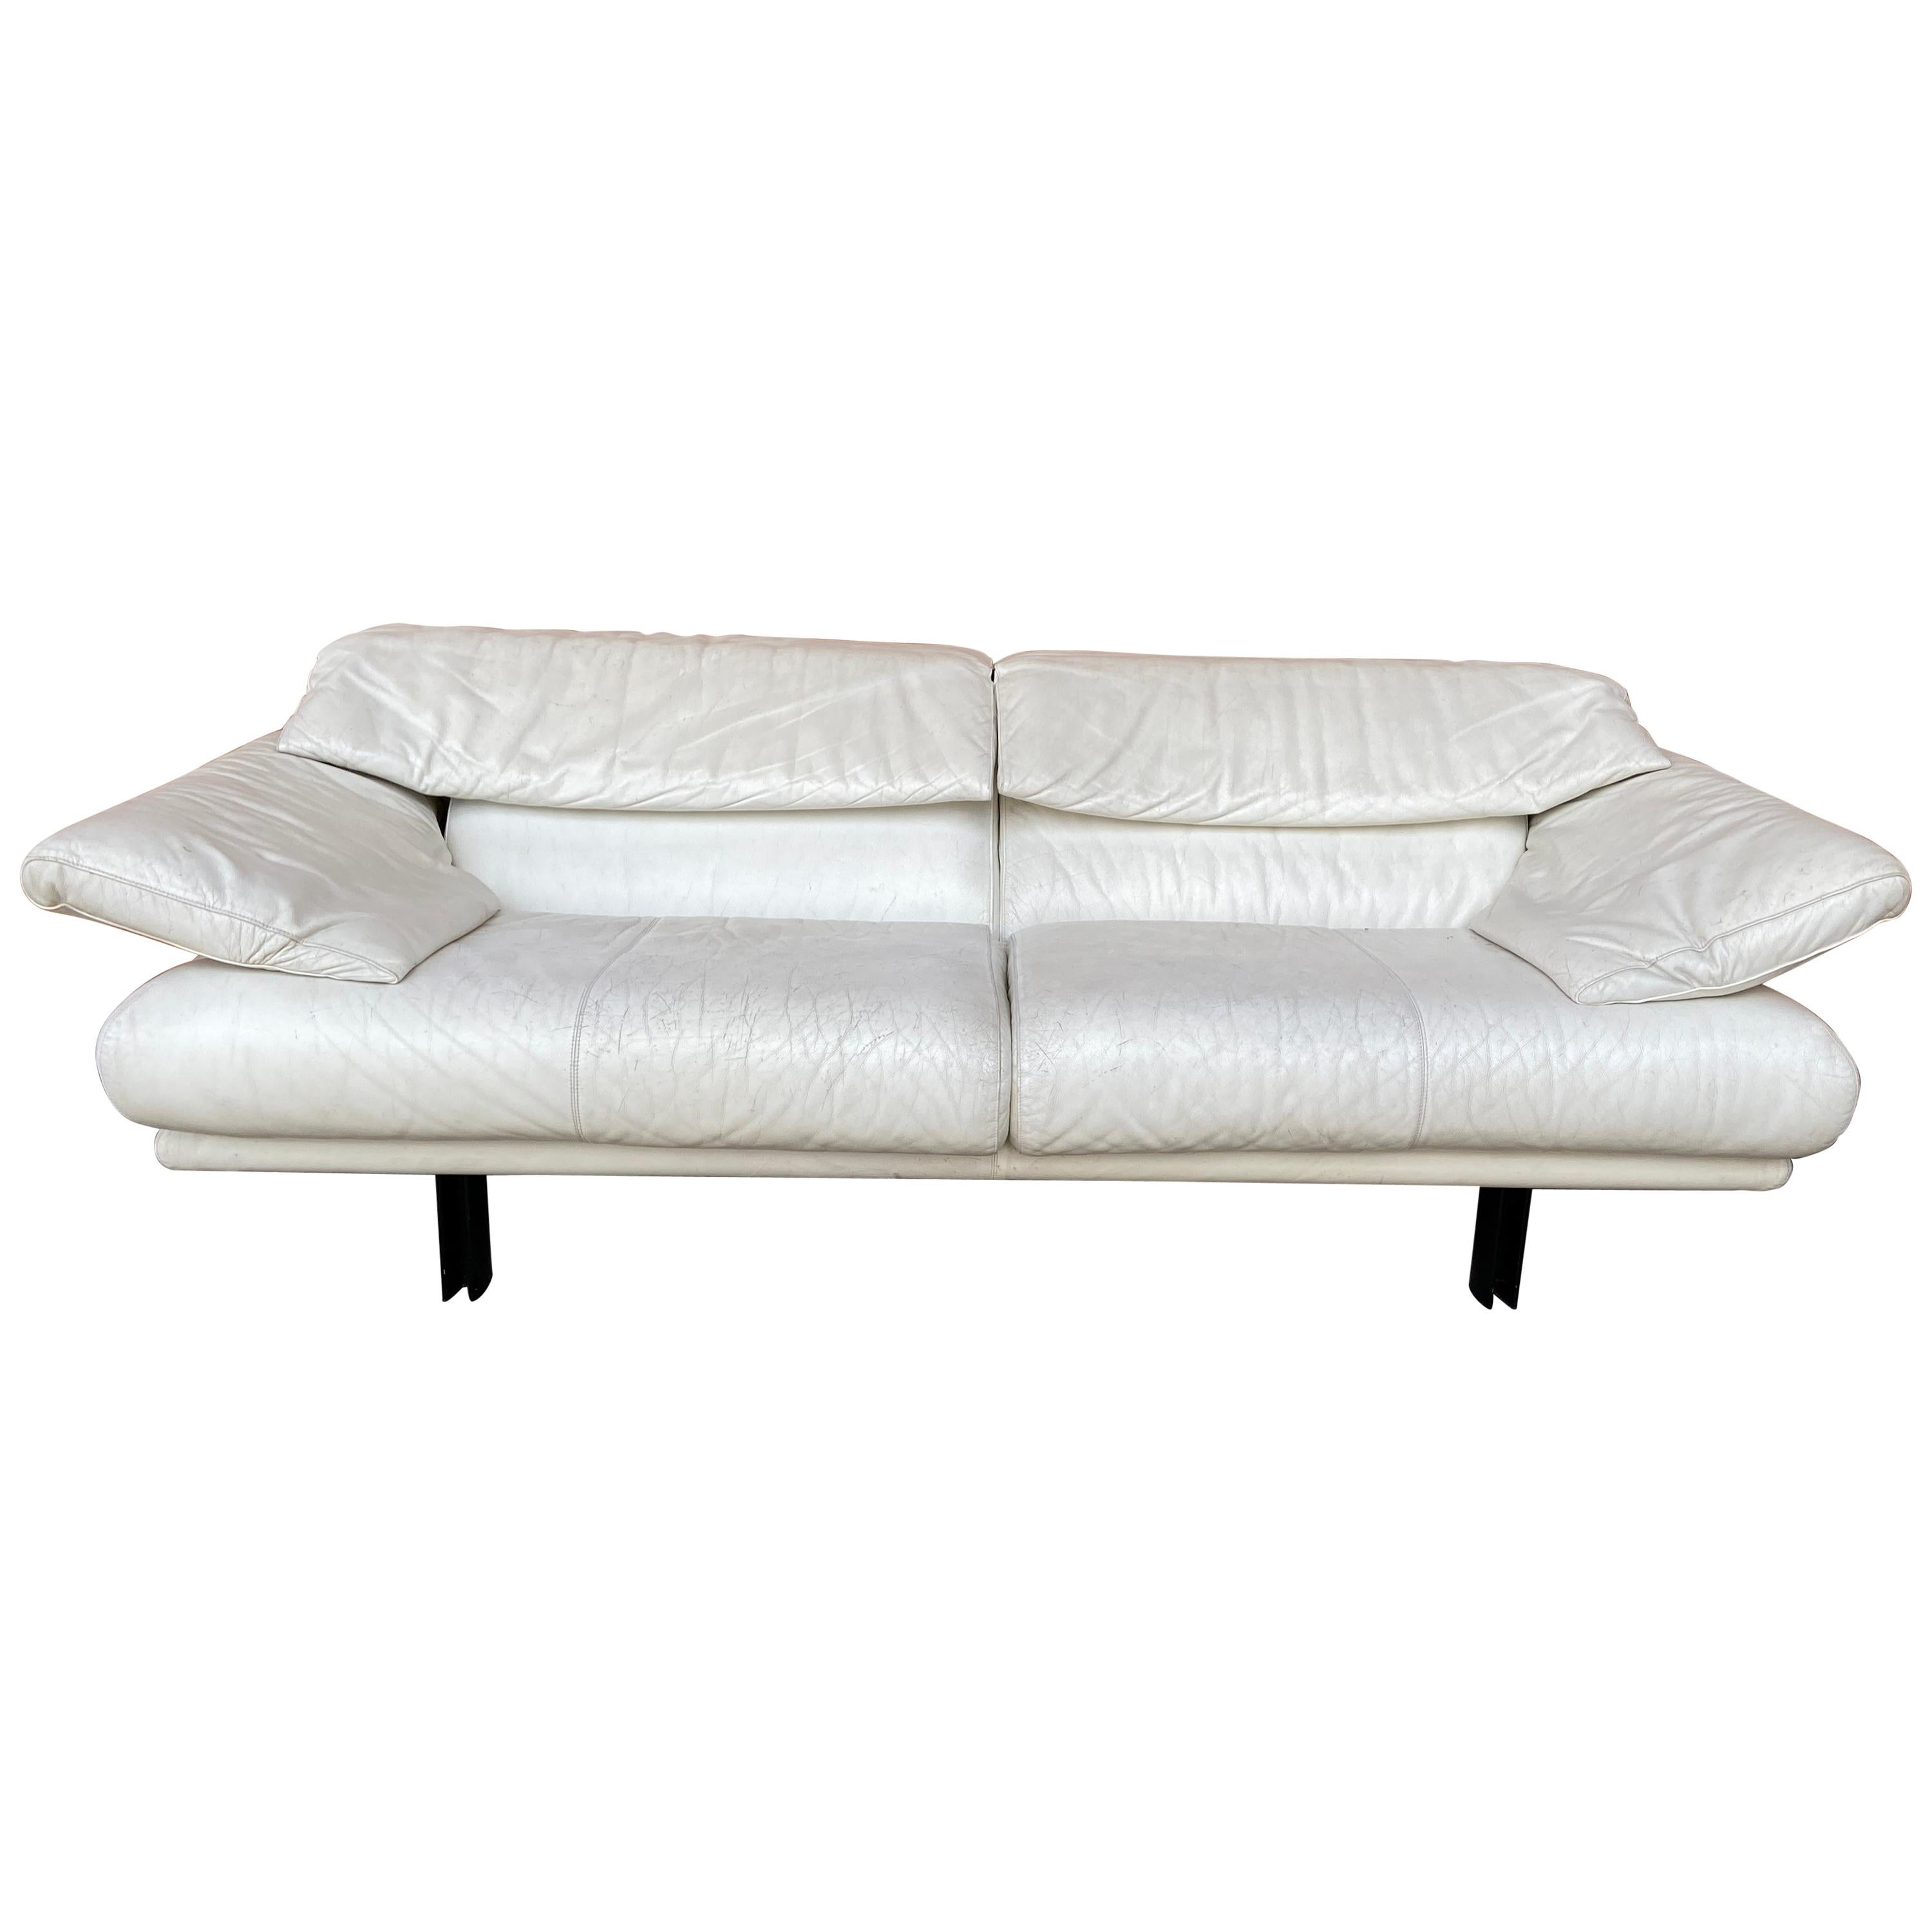 Half Seat White Leather Sofa, Modern White Leather Furniture